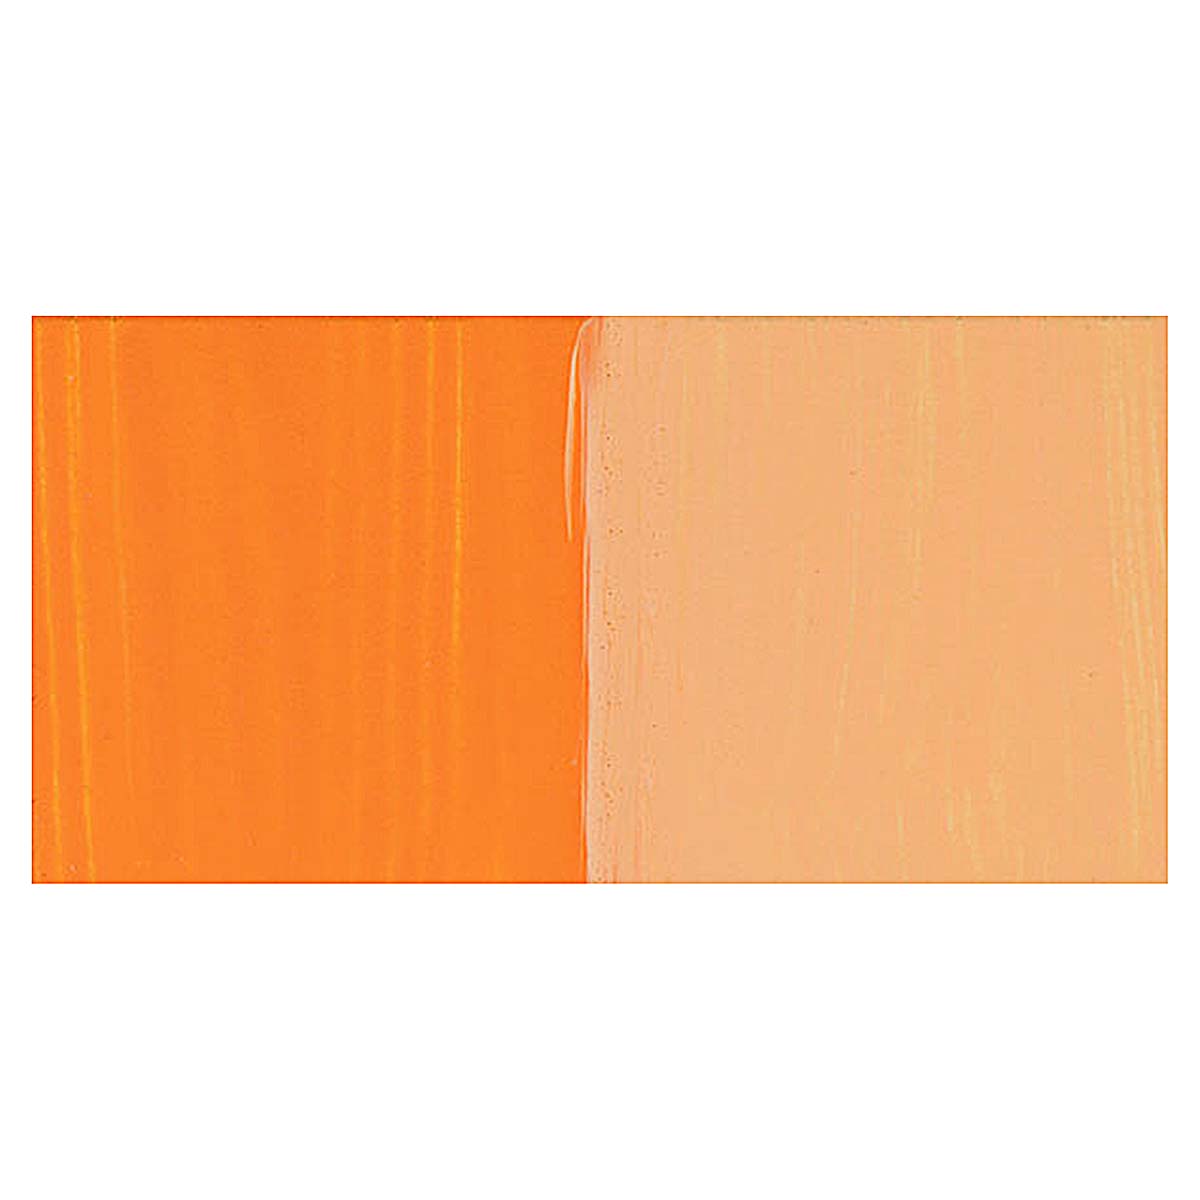  Deco Art Americana Acrylics, One Size, Bright Orange